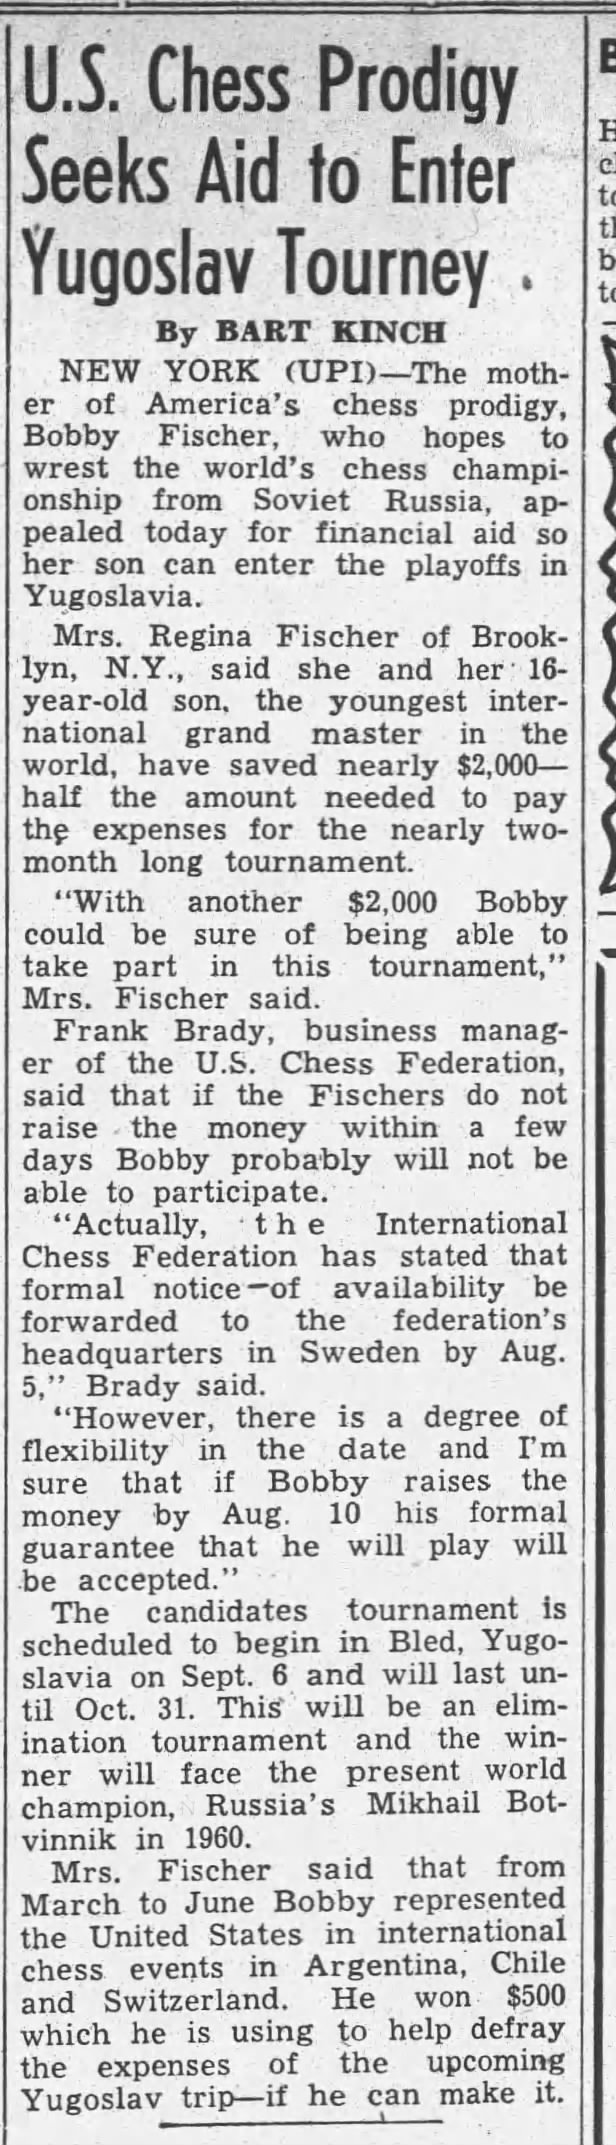 U.S. Chess Prodigy Seeks Aid to Enter Yugoslav Tourney